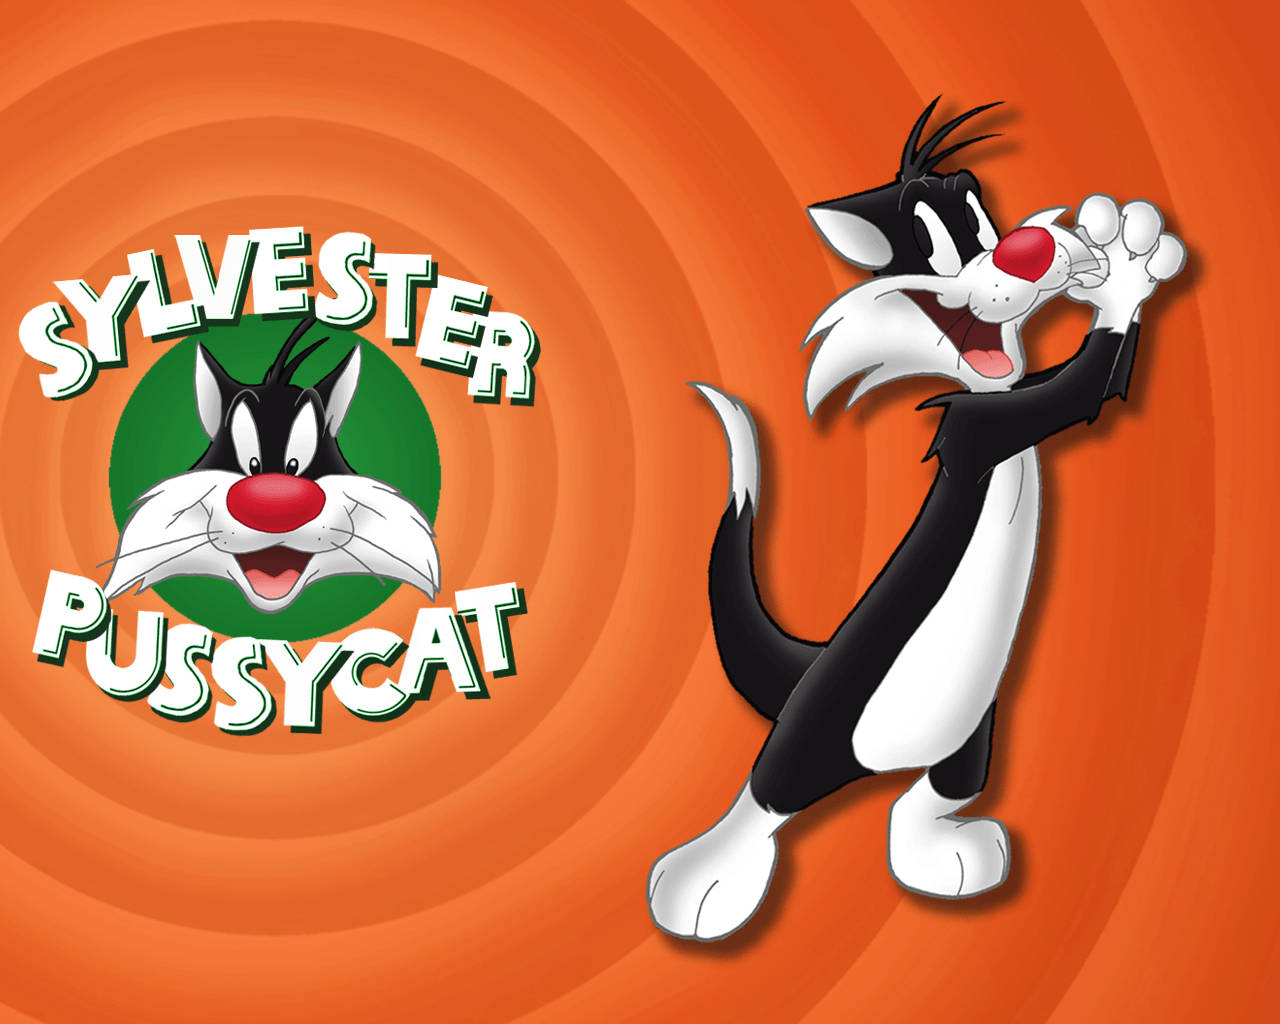 Sylvesterpussycat-kunstwerk. Wallpaper